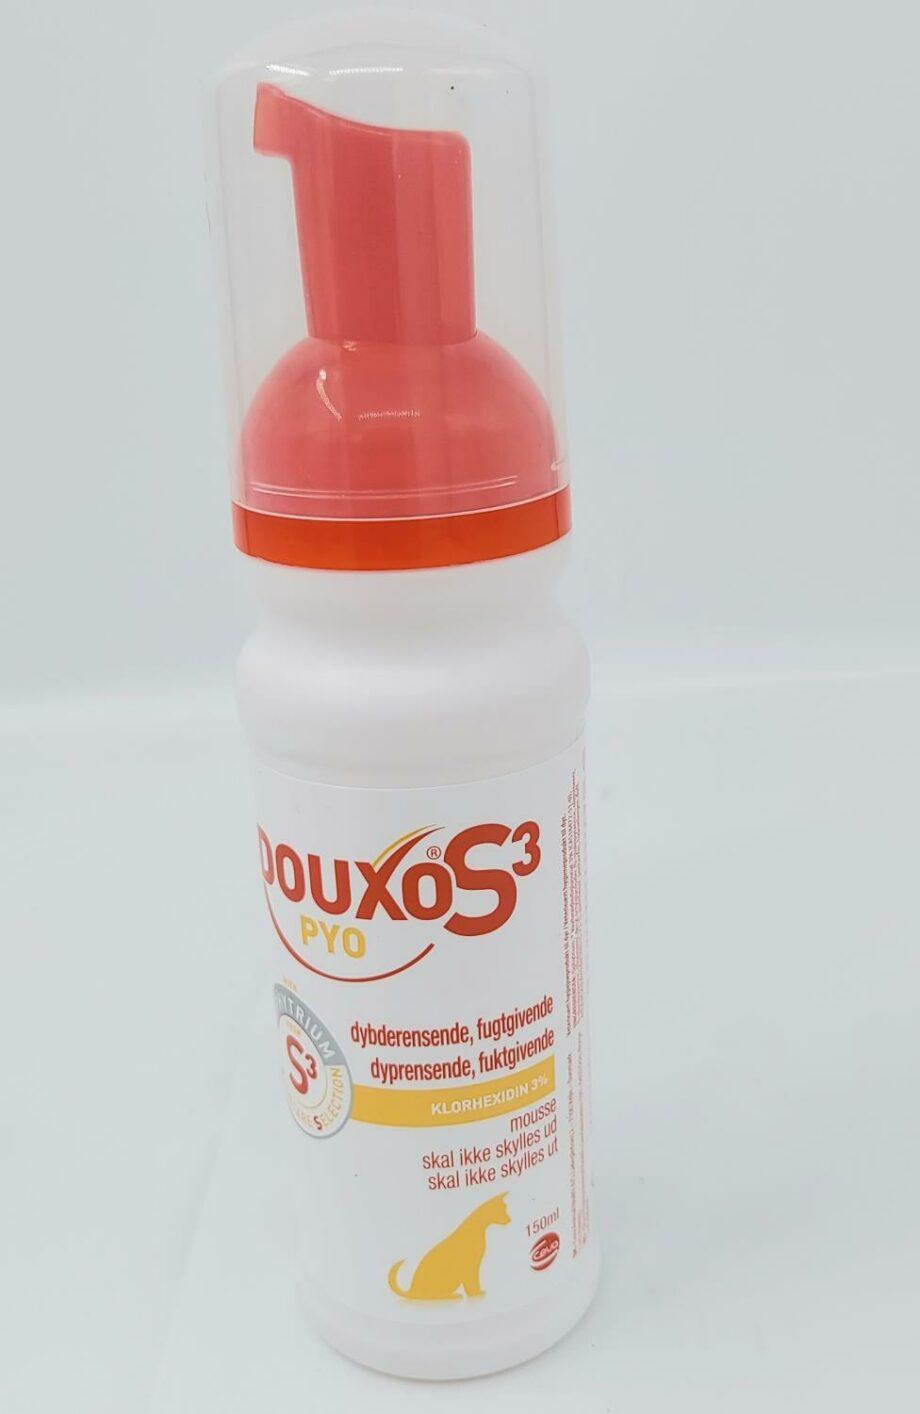 2051 64489 1 920x1414 - DuoxoS3 dyprensende, fuktgivende mousse, 150 ml.